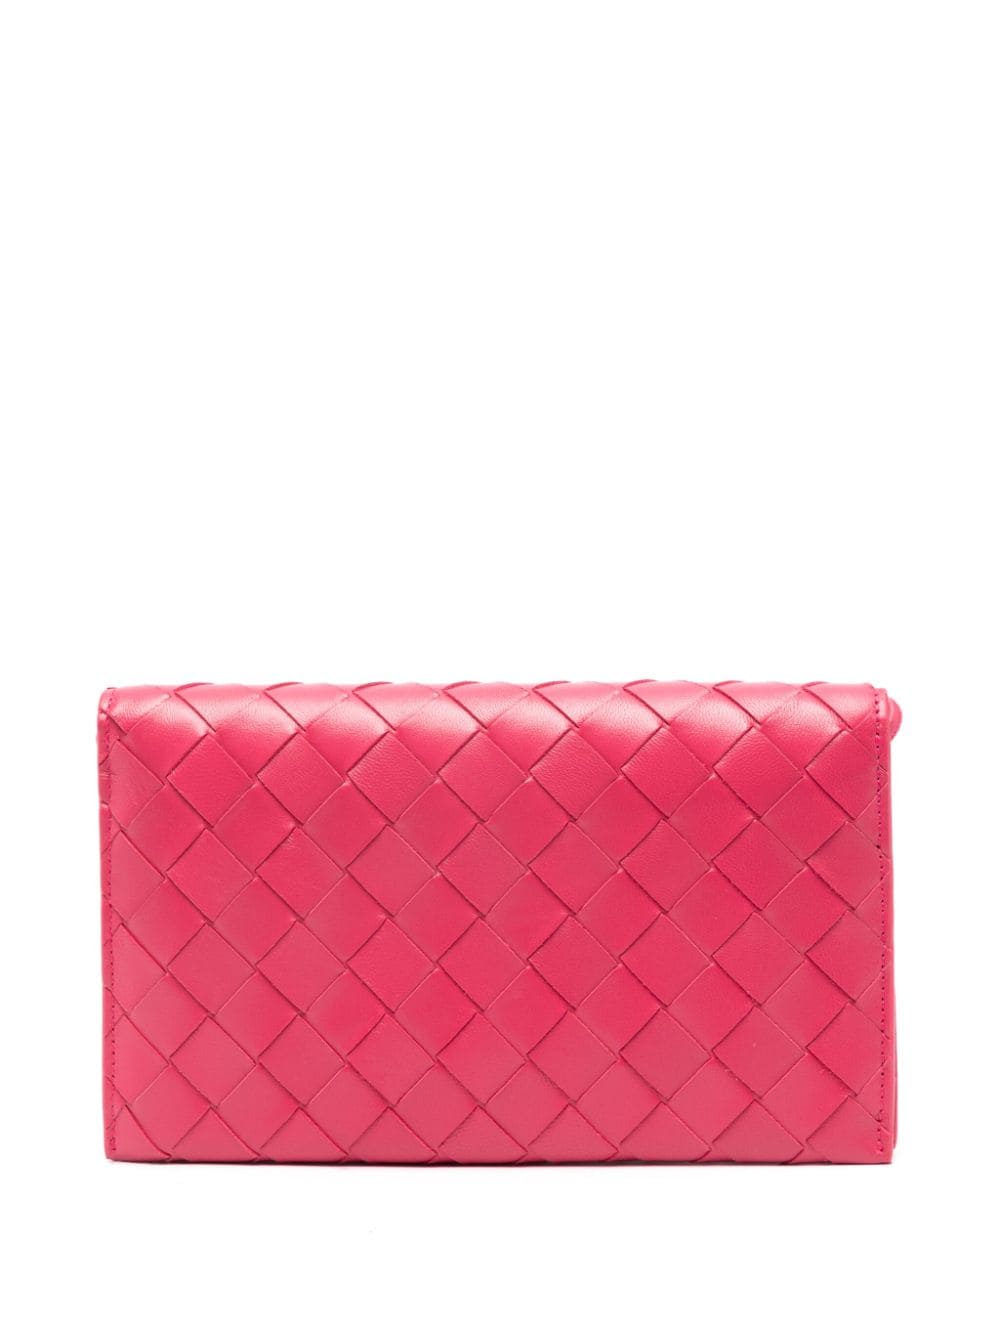 Bottega Veneta Intrecciato leather wallet - Roze